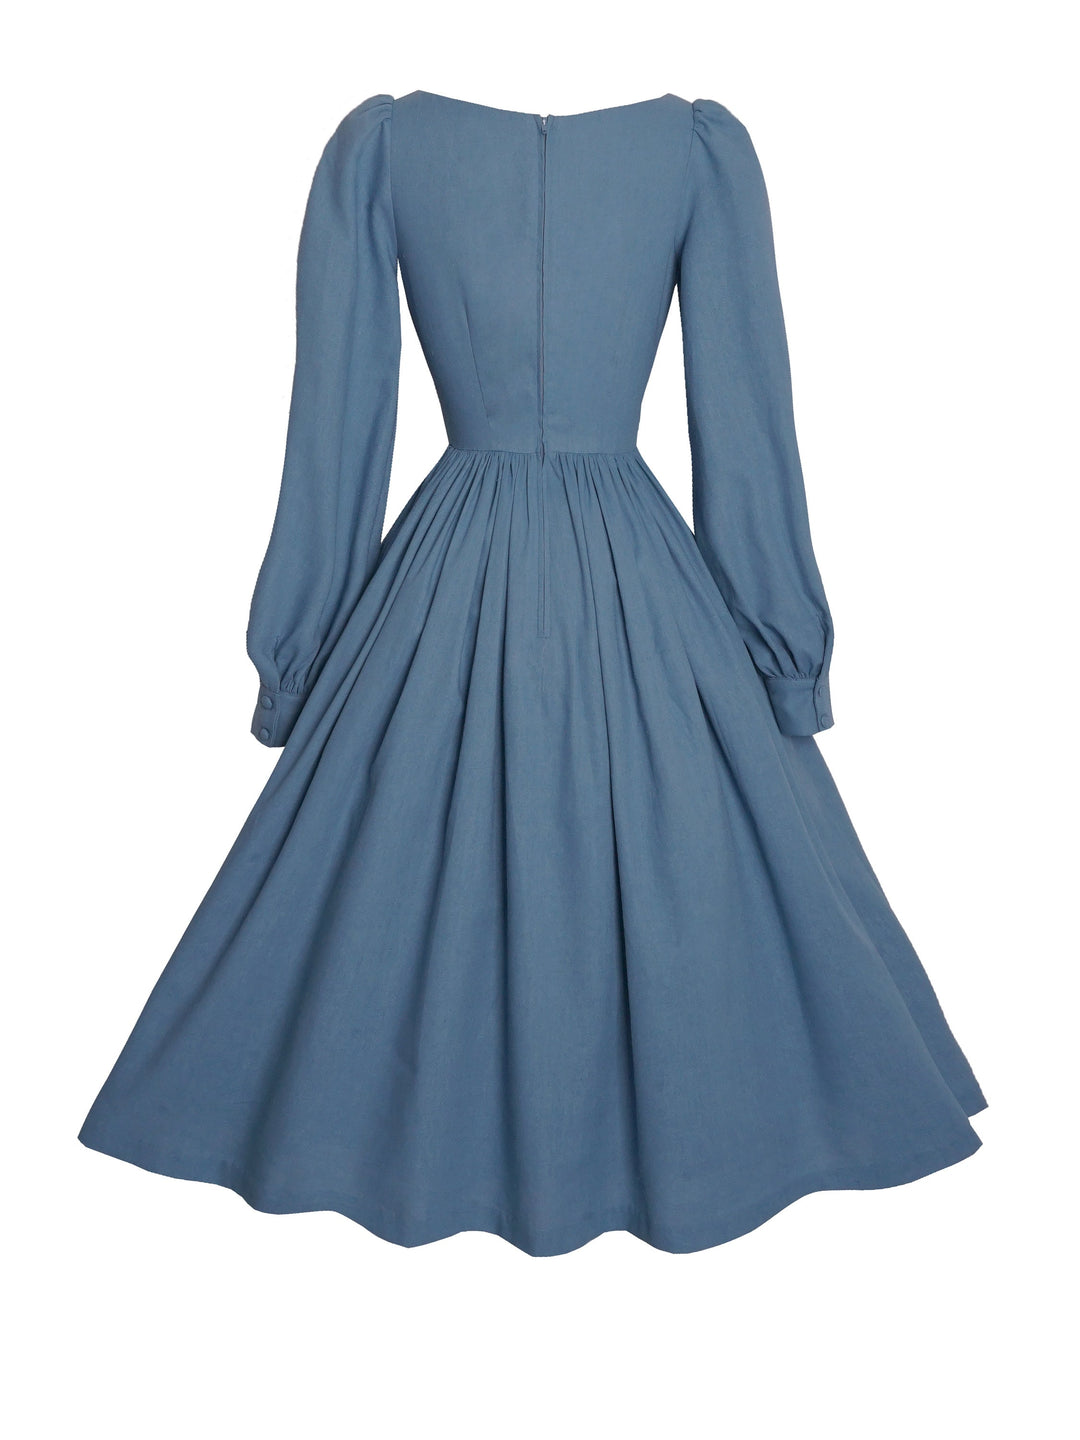 MTO - Harlow Dress in Carolina Blue Linen